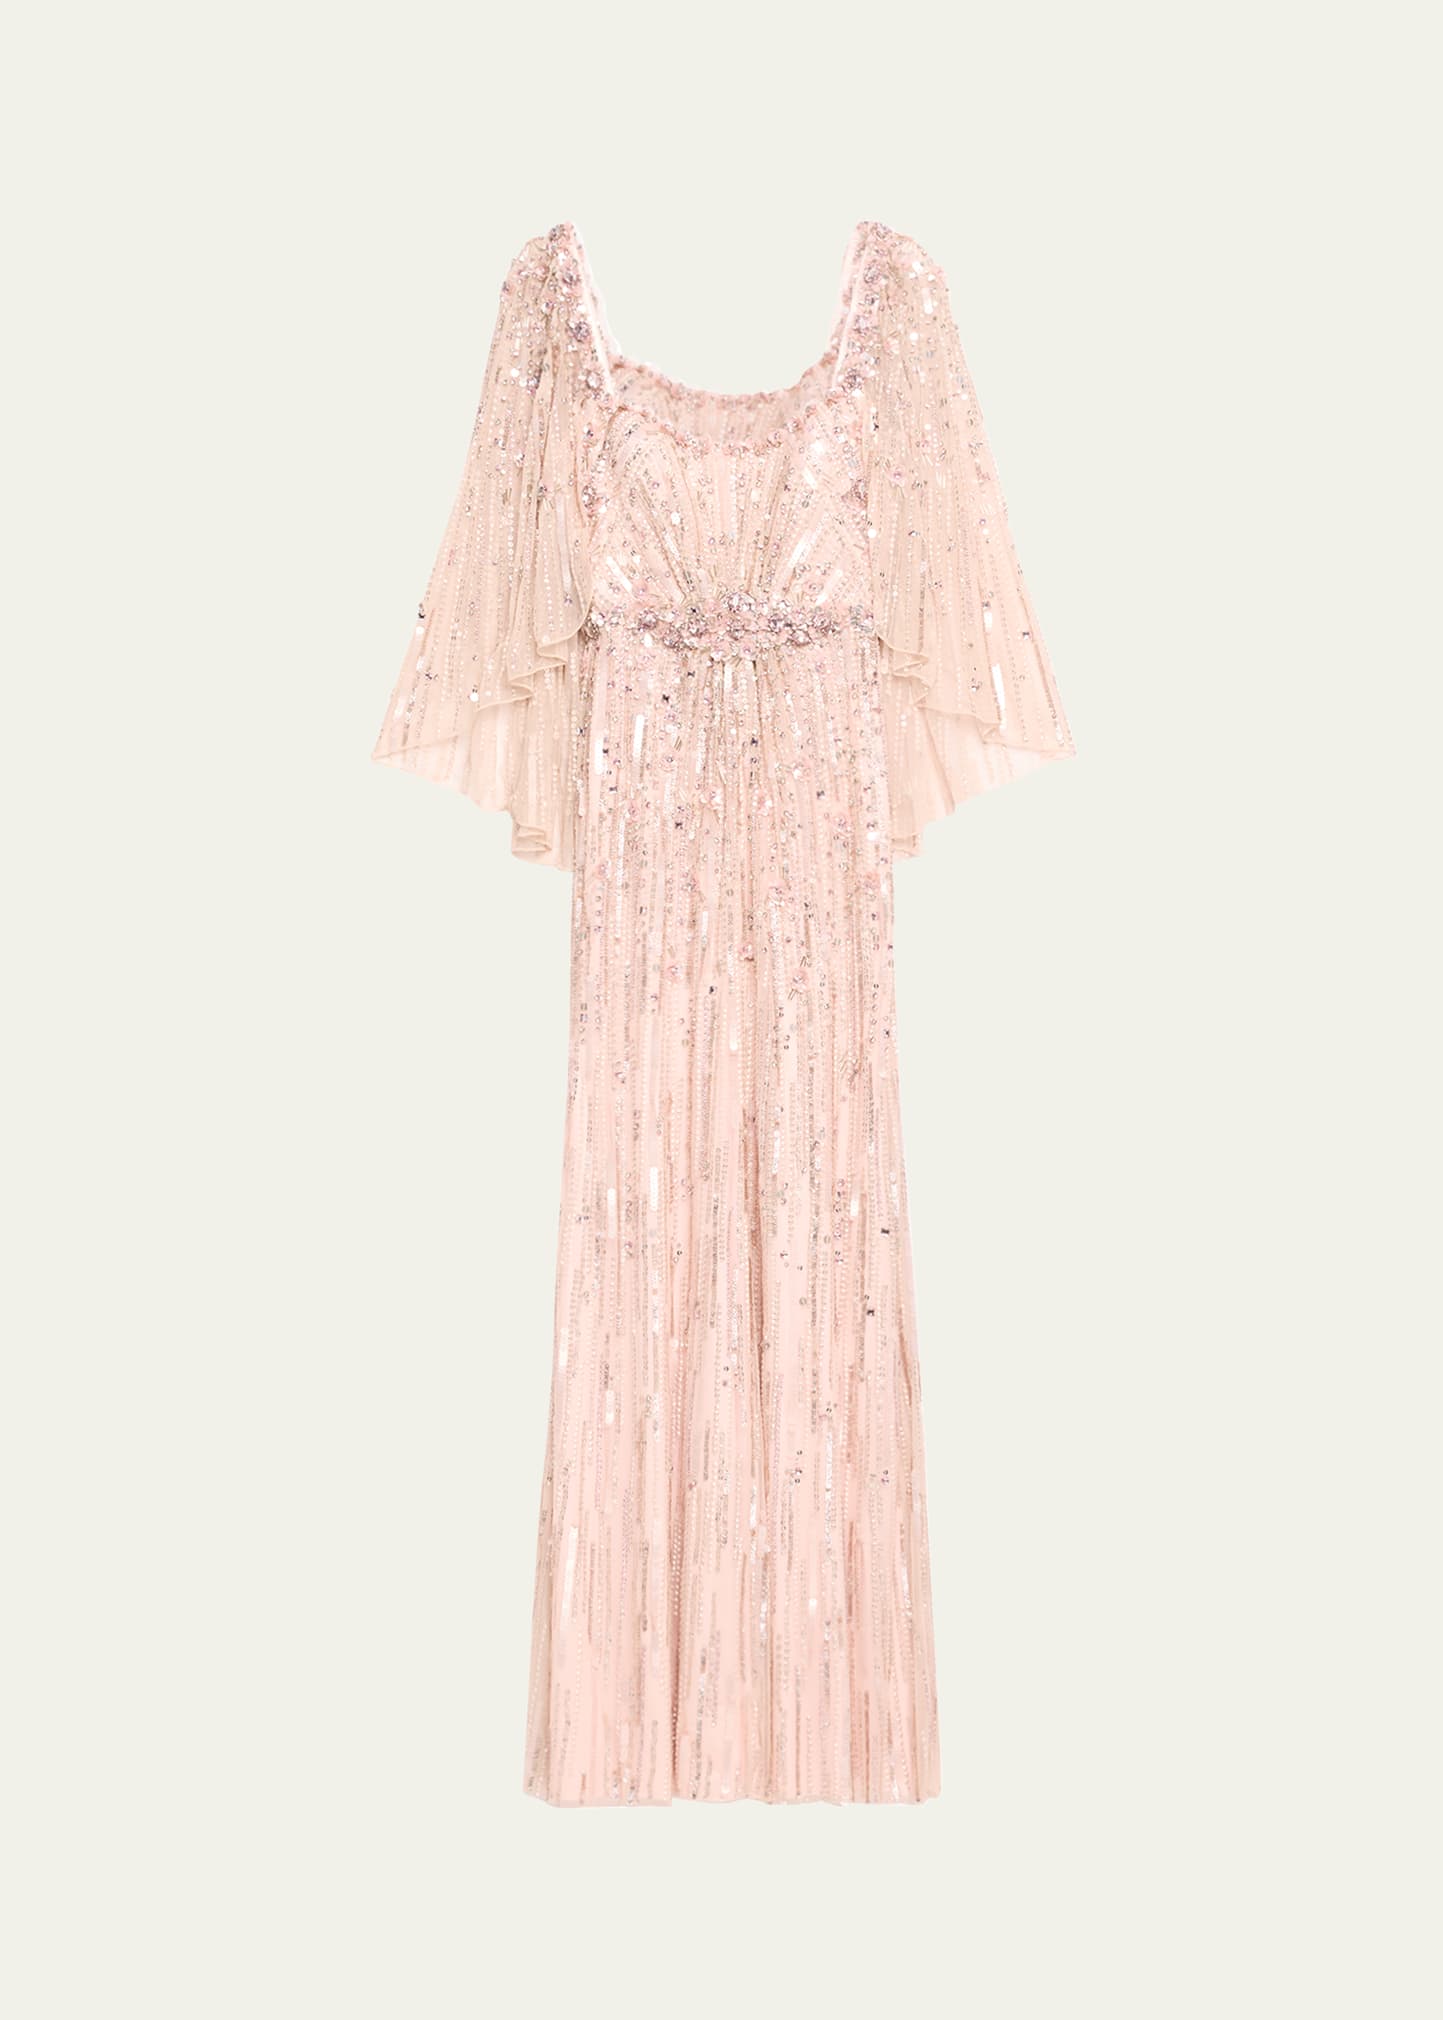 Jenny Packham Brightstar Crystal Sequined Floral Applique Backless Dress | Bergdorf Goodman